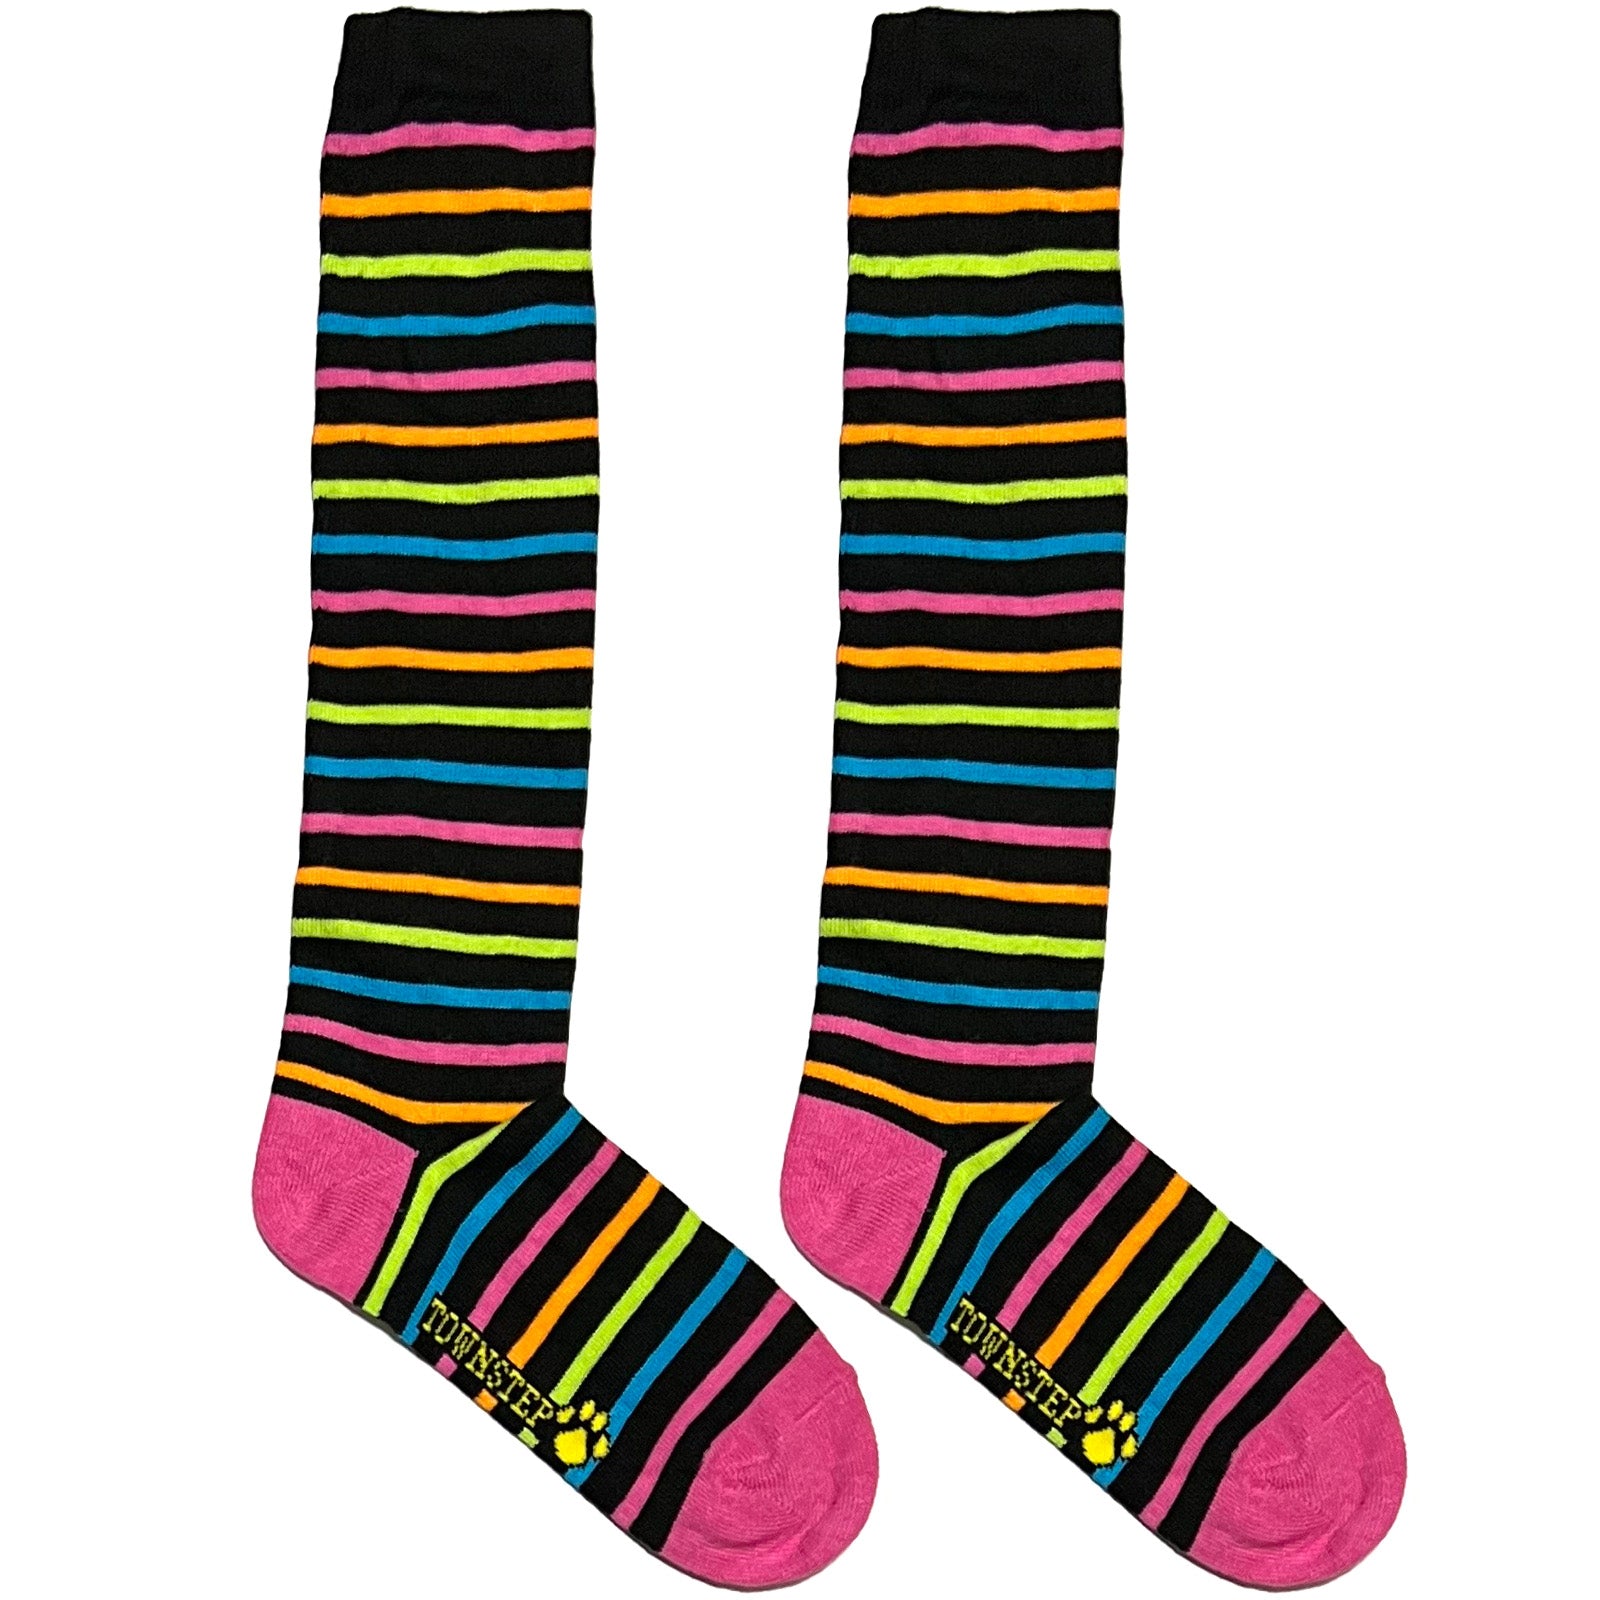 Black And Pink Stripes Socks